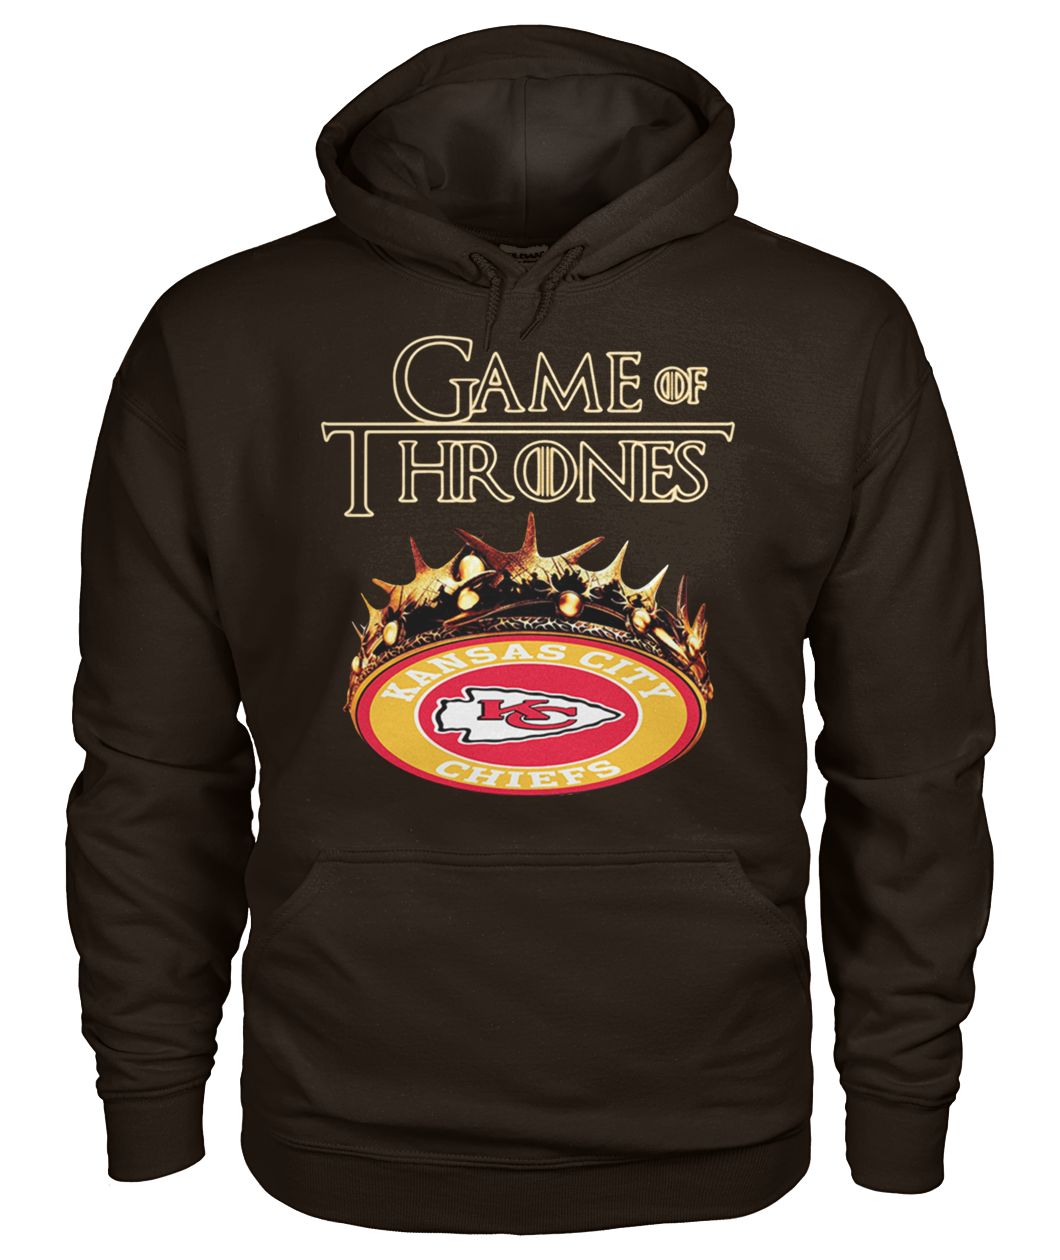 Game of thrones crown kansas city chiefs gildan hoodie